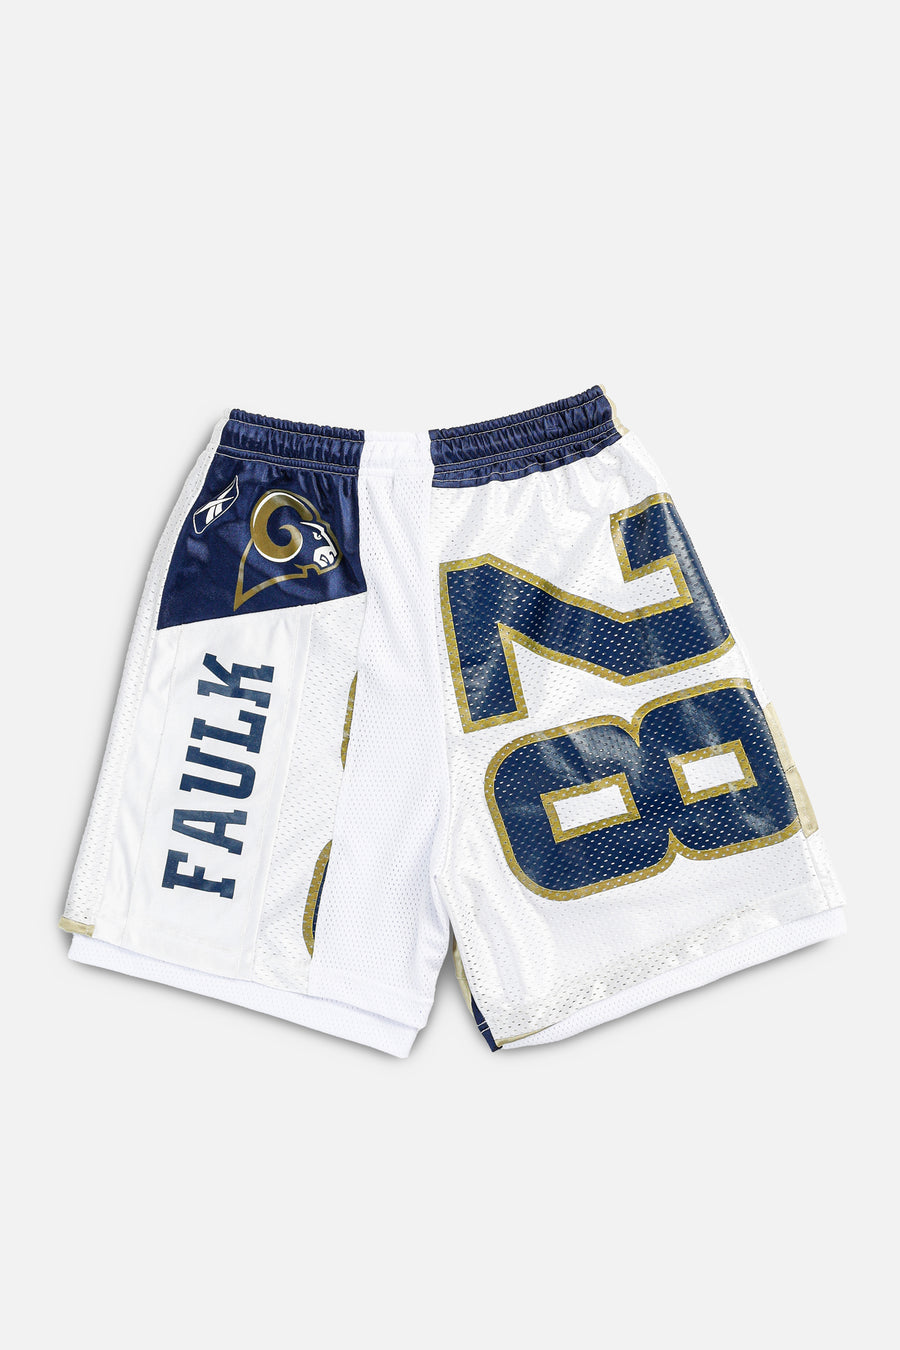 Unisex Rework LA Rams NFL Jersey Shorts - M